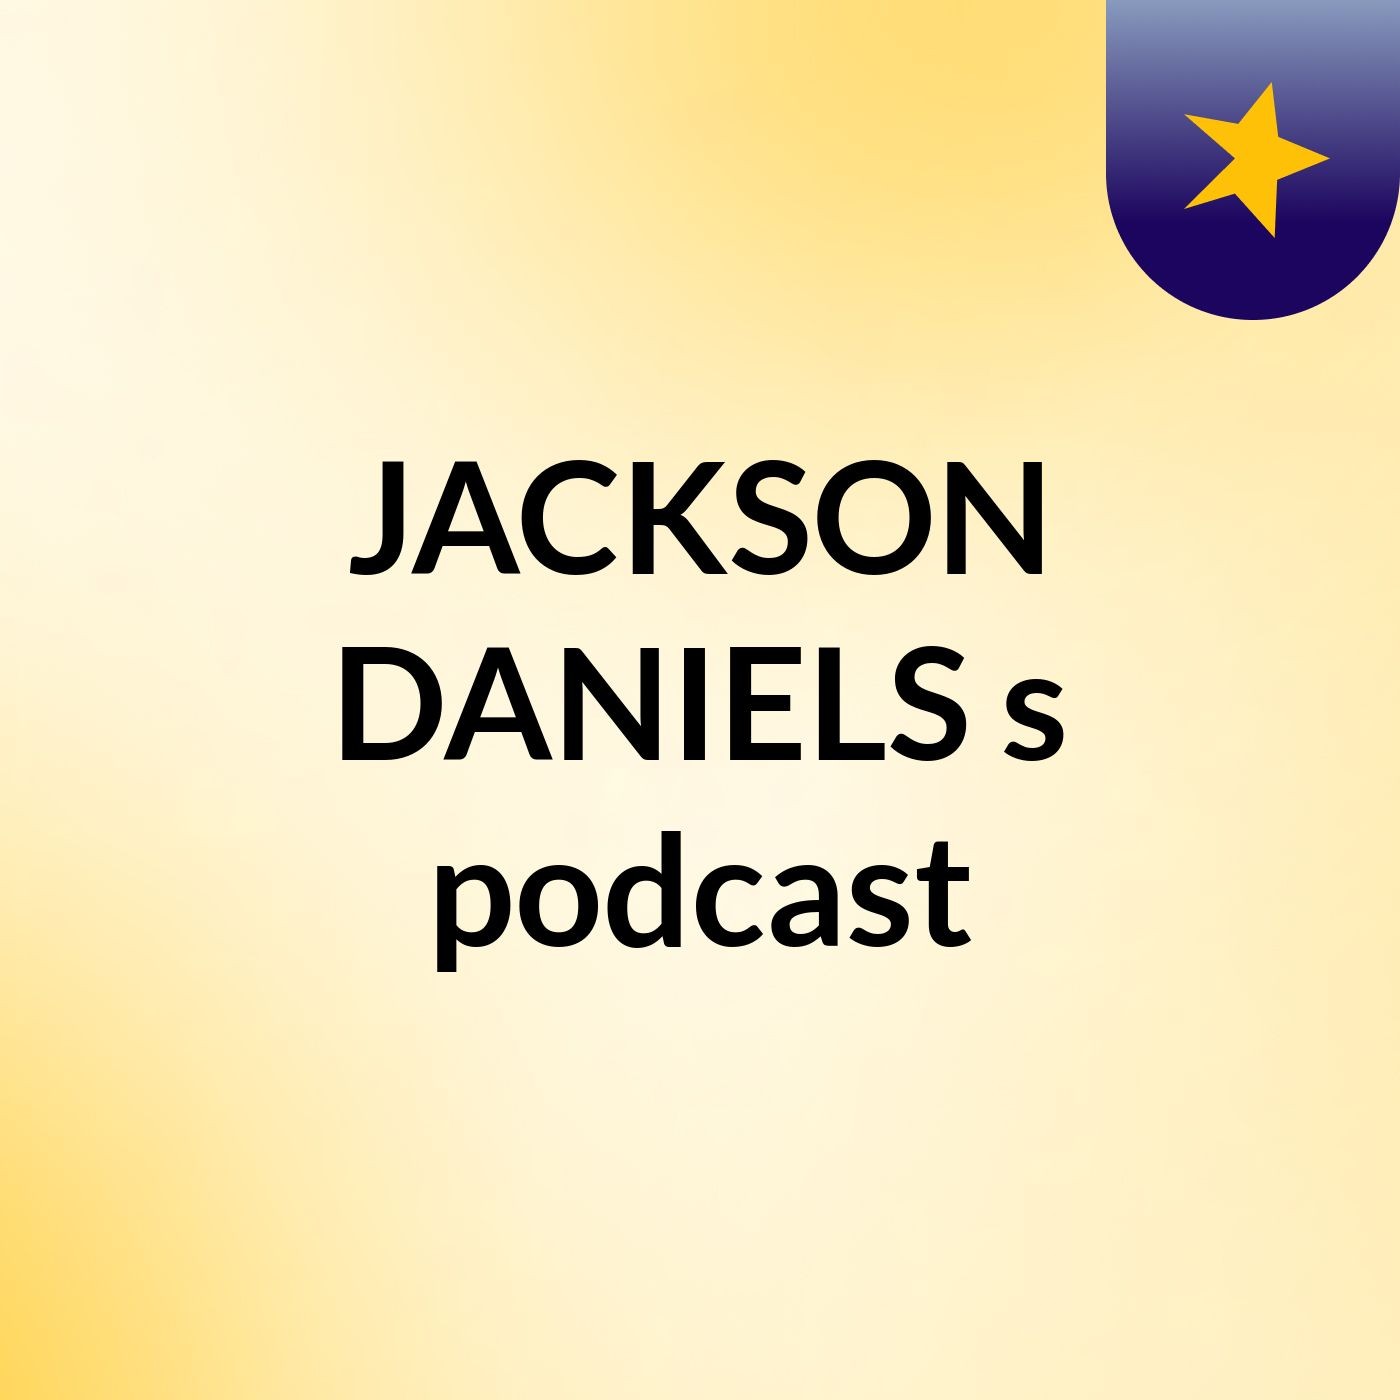 JACKSON DANIELS's podcast